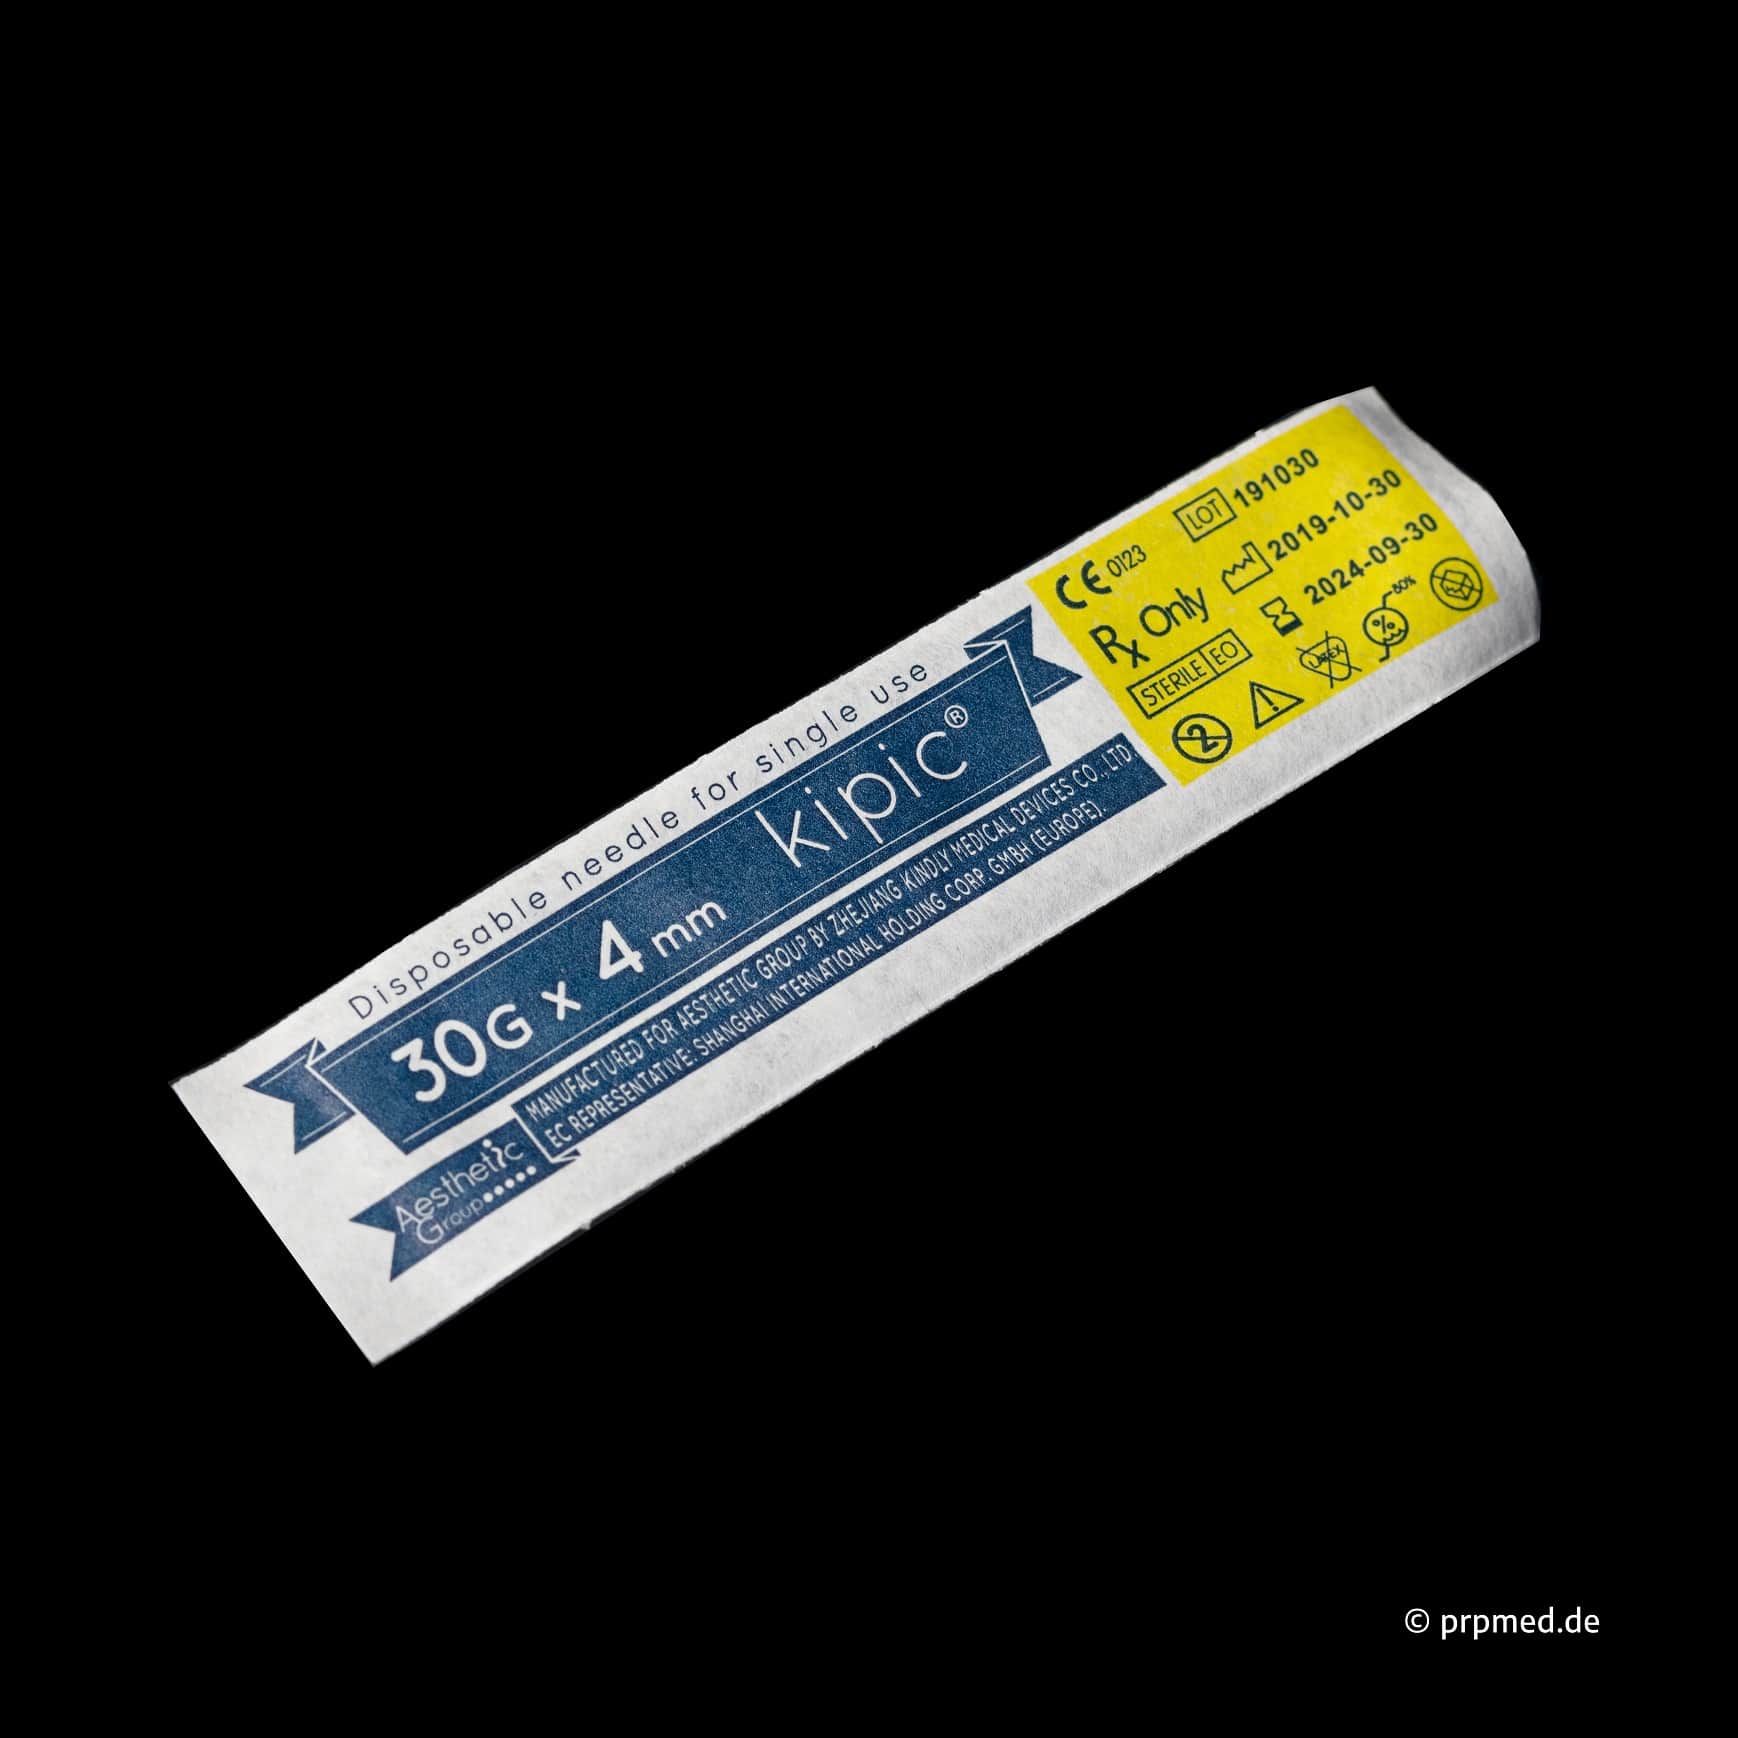 KIPIC® Игла за мезотерапия 30G 4mm